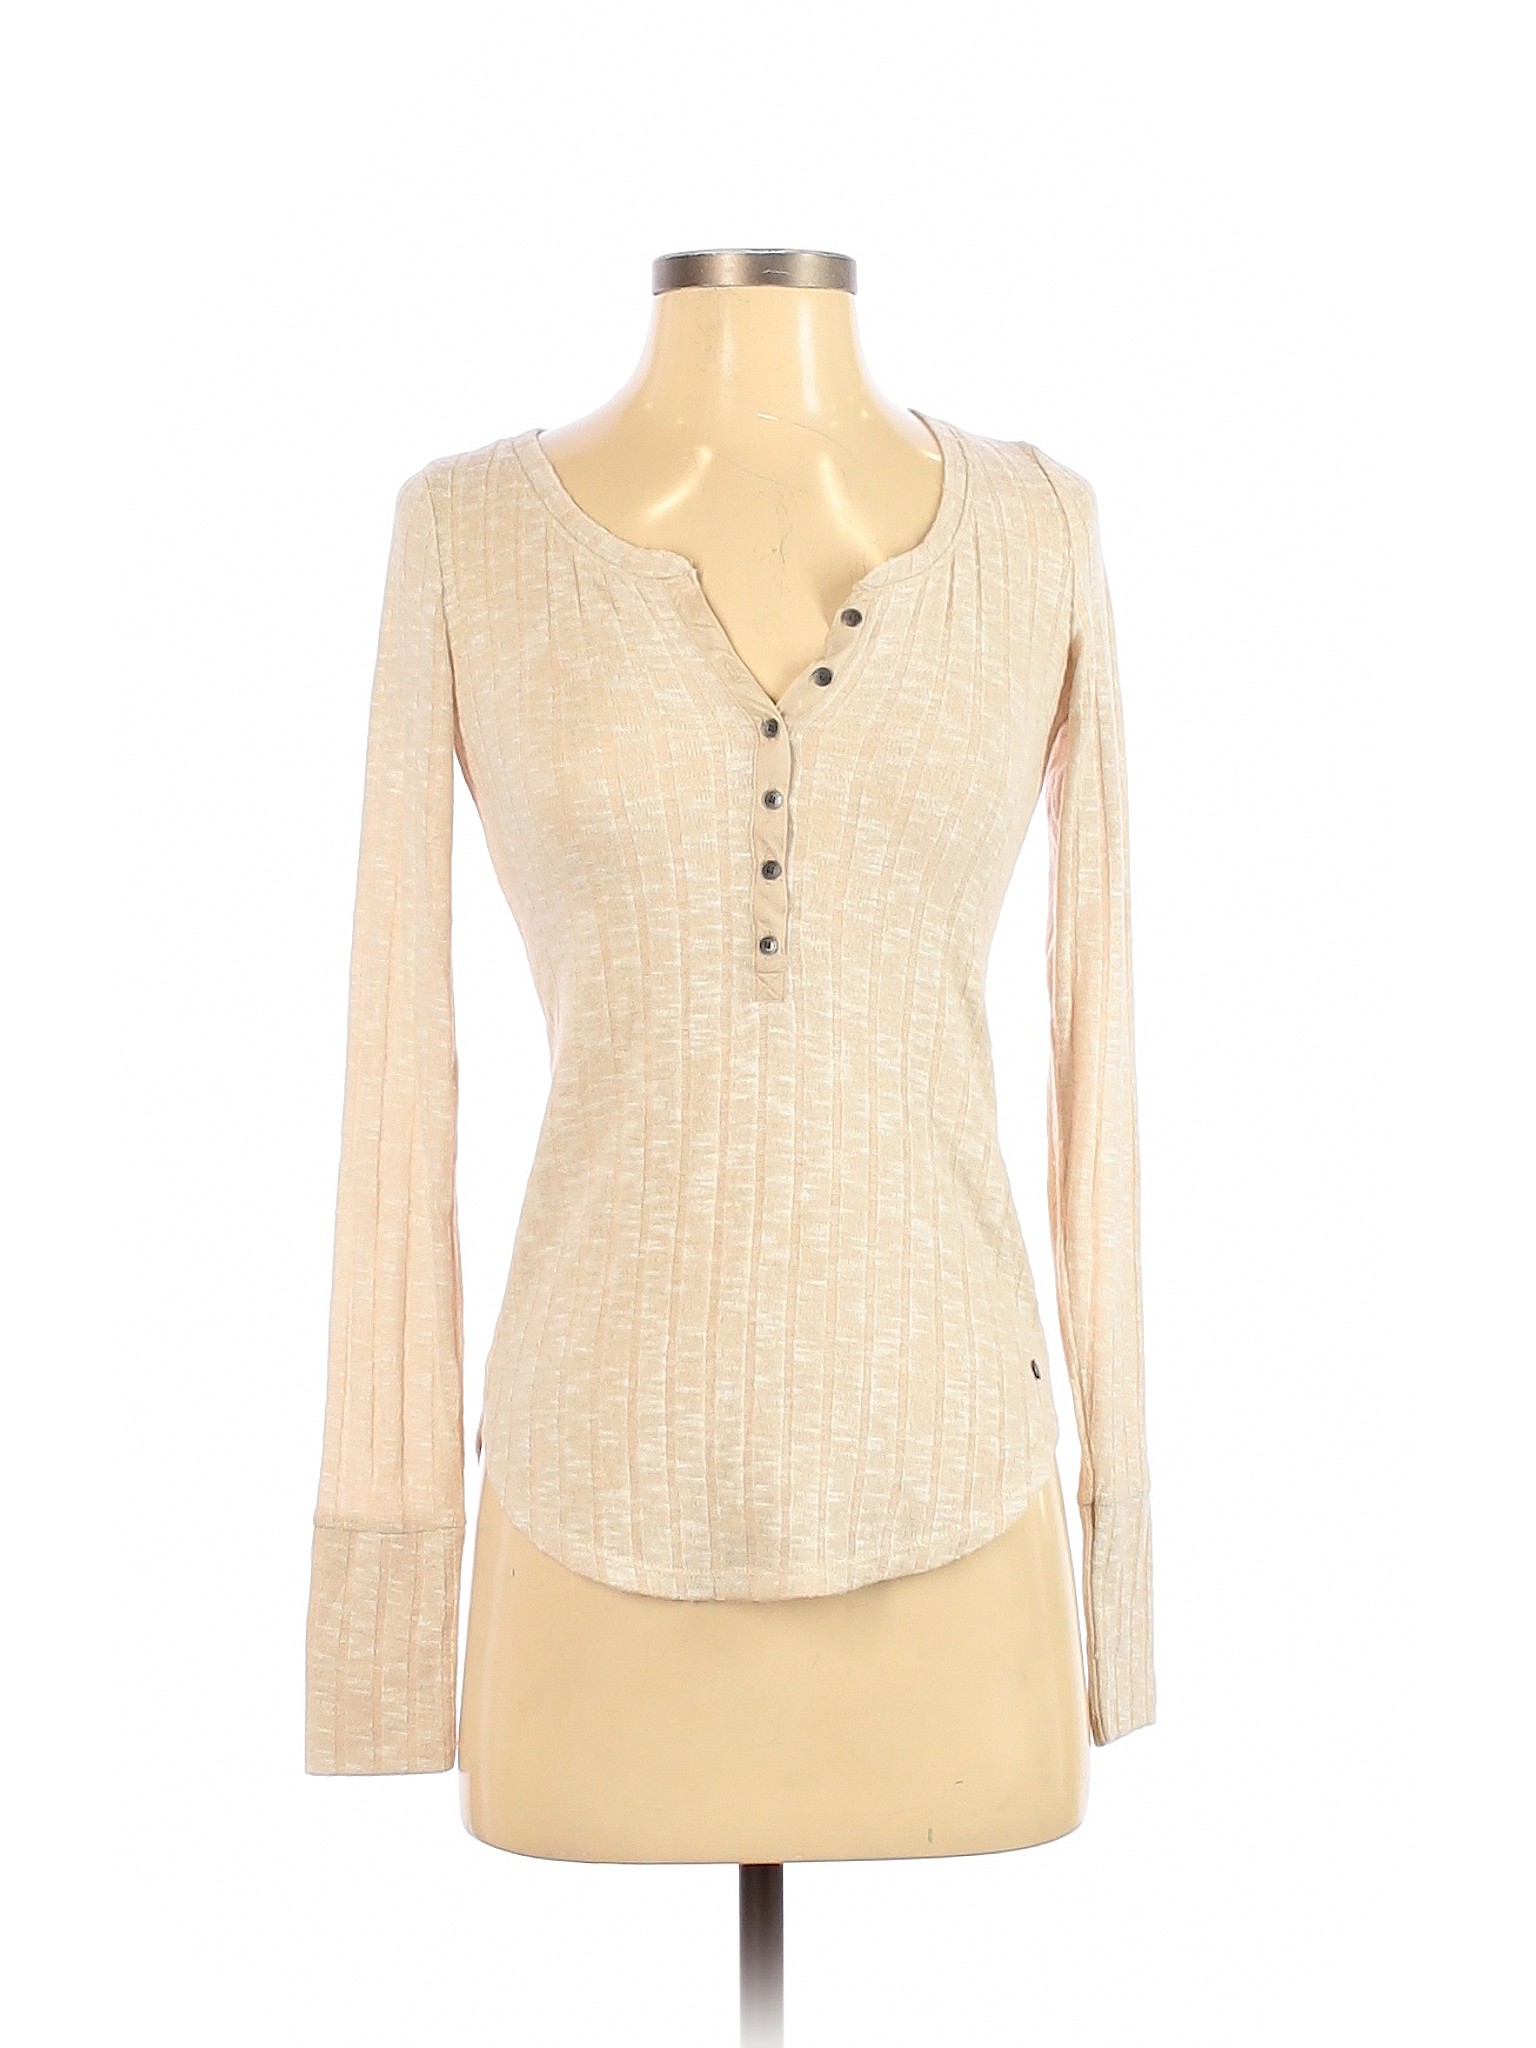 NWT Abercrombie & Fitch Women Ivory Long Sleeve Henley XS | eBay